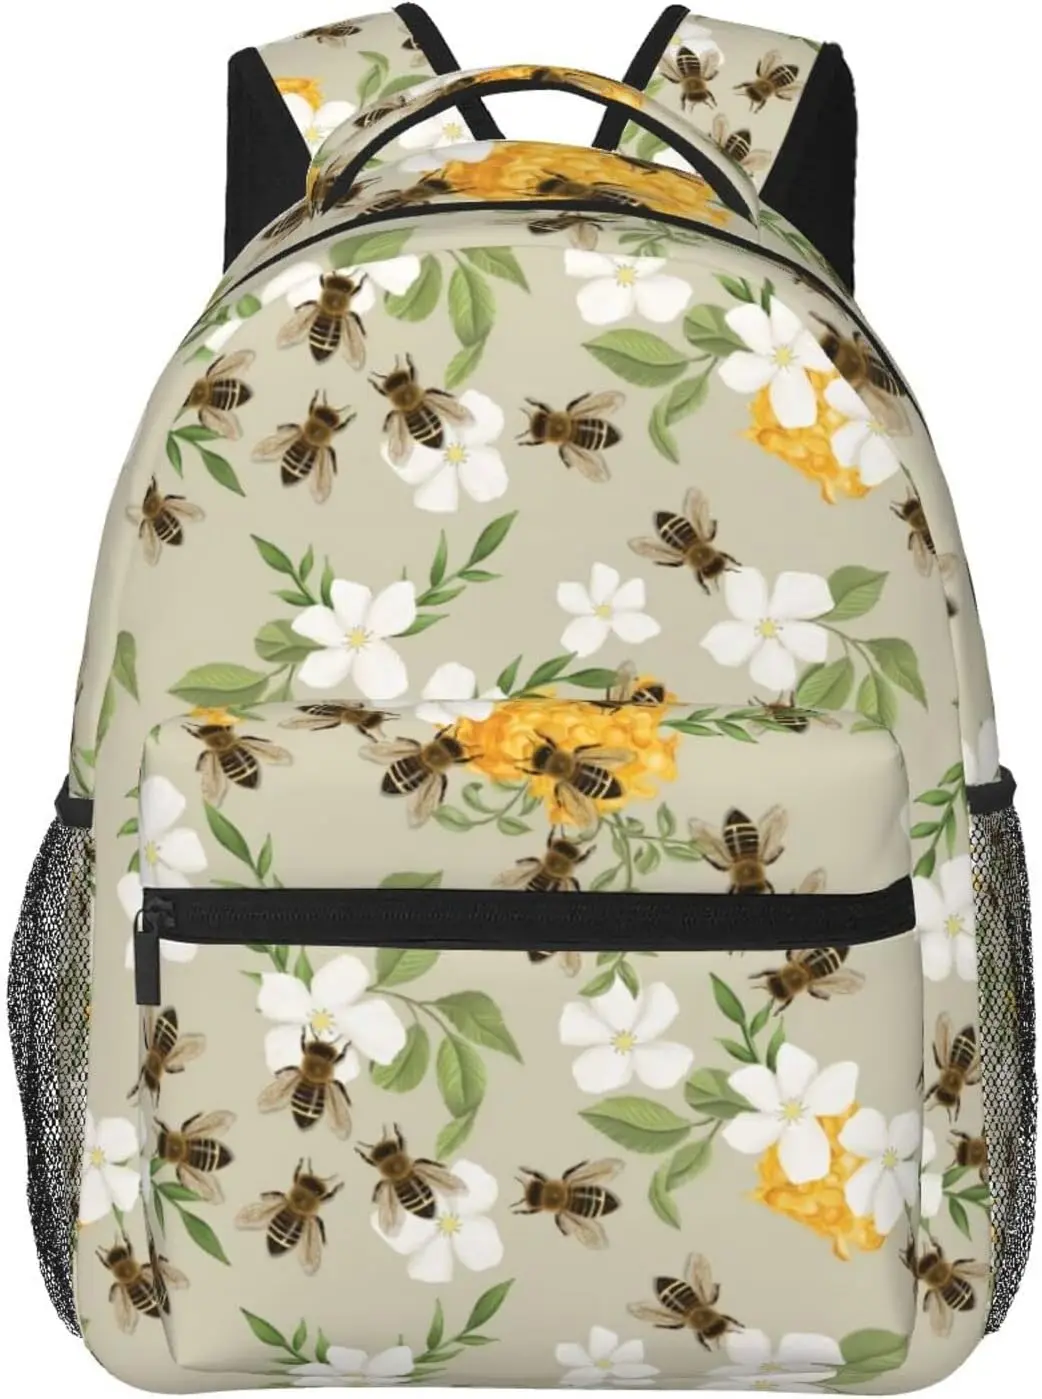 

Bee Bees Animal Backpack Fashion Travel Hiking Camping Daypack Computer Backpacks Bookbag for Men Women